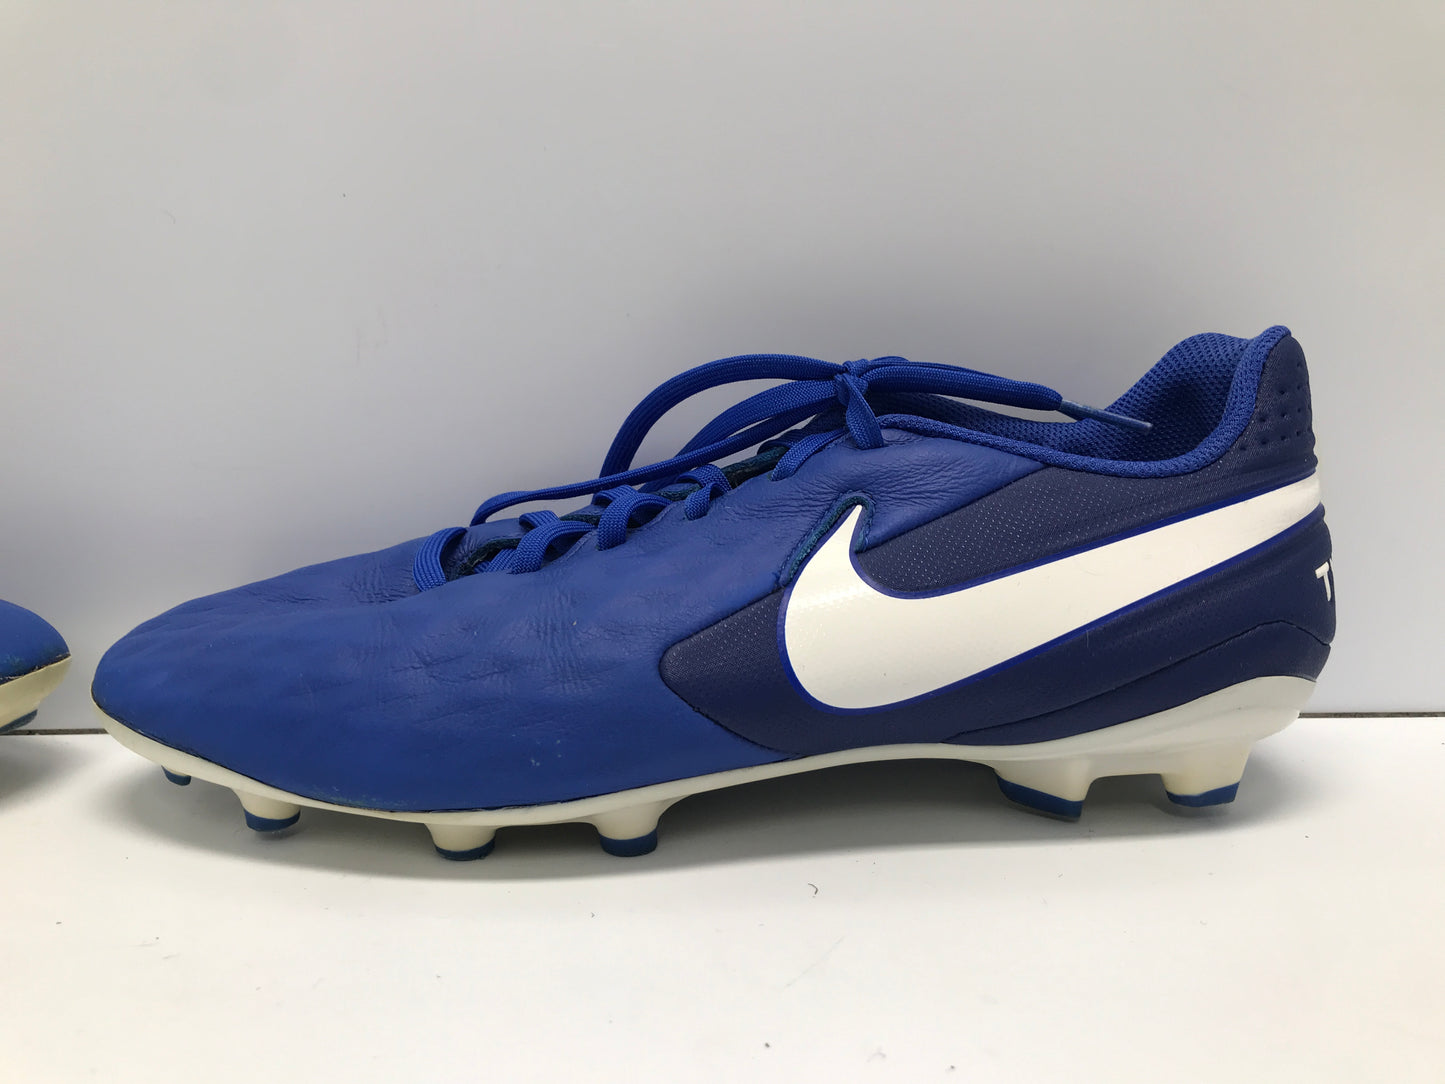 Soccer Shoes Cleats Men's Size 9.5 Nike Tiempo Blue